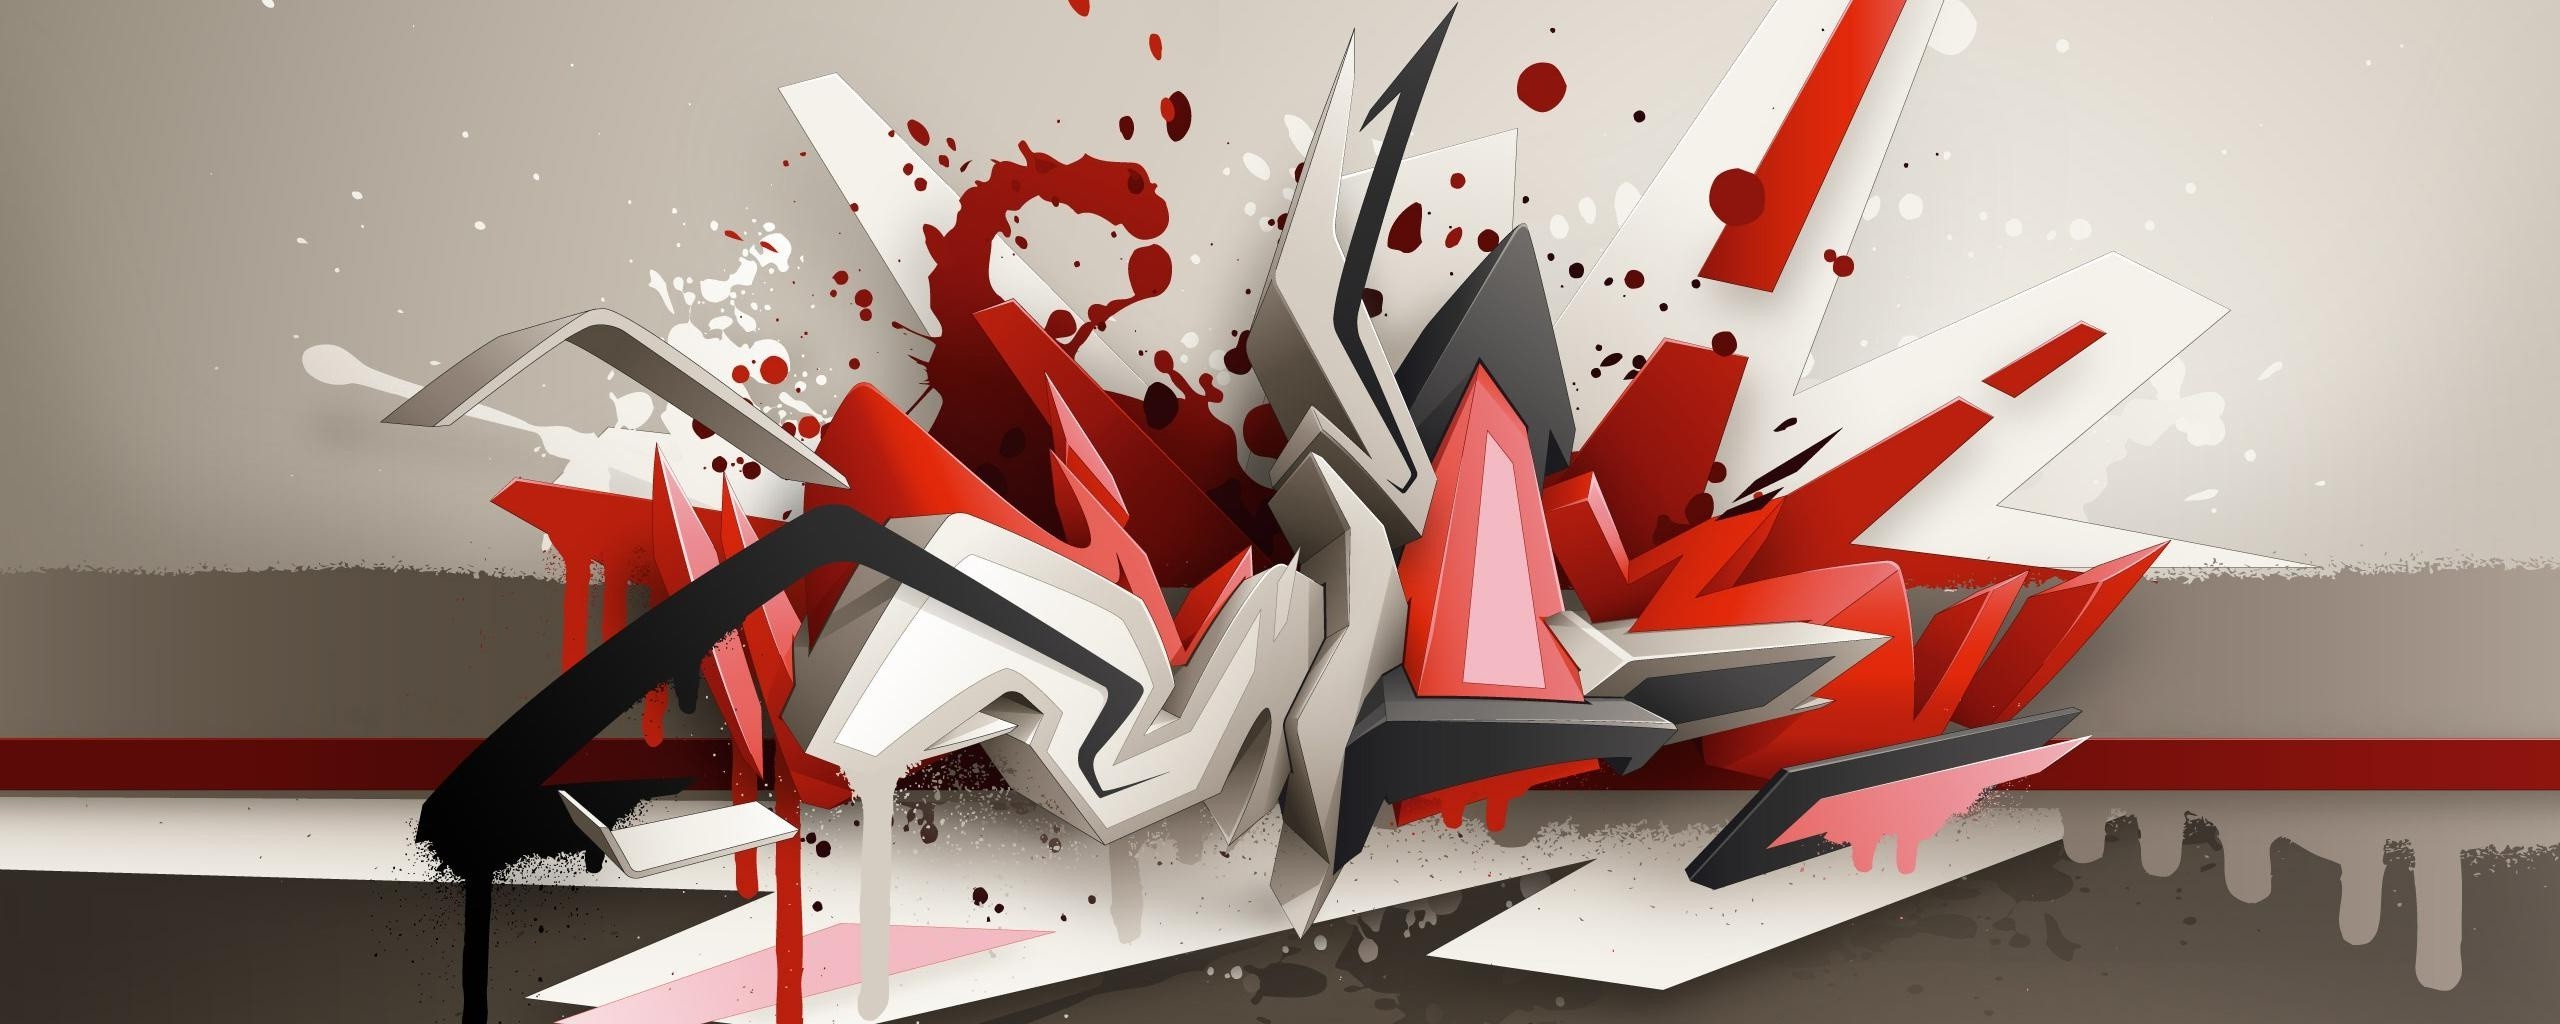 tapete grafiti 3d,rot,grafikdesign,kunst,karminrot,graffiti